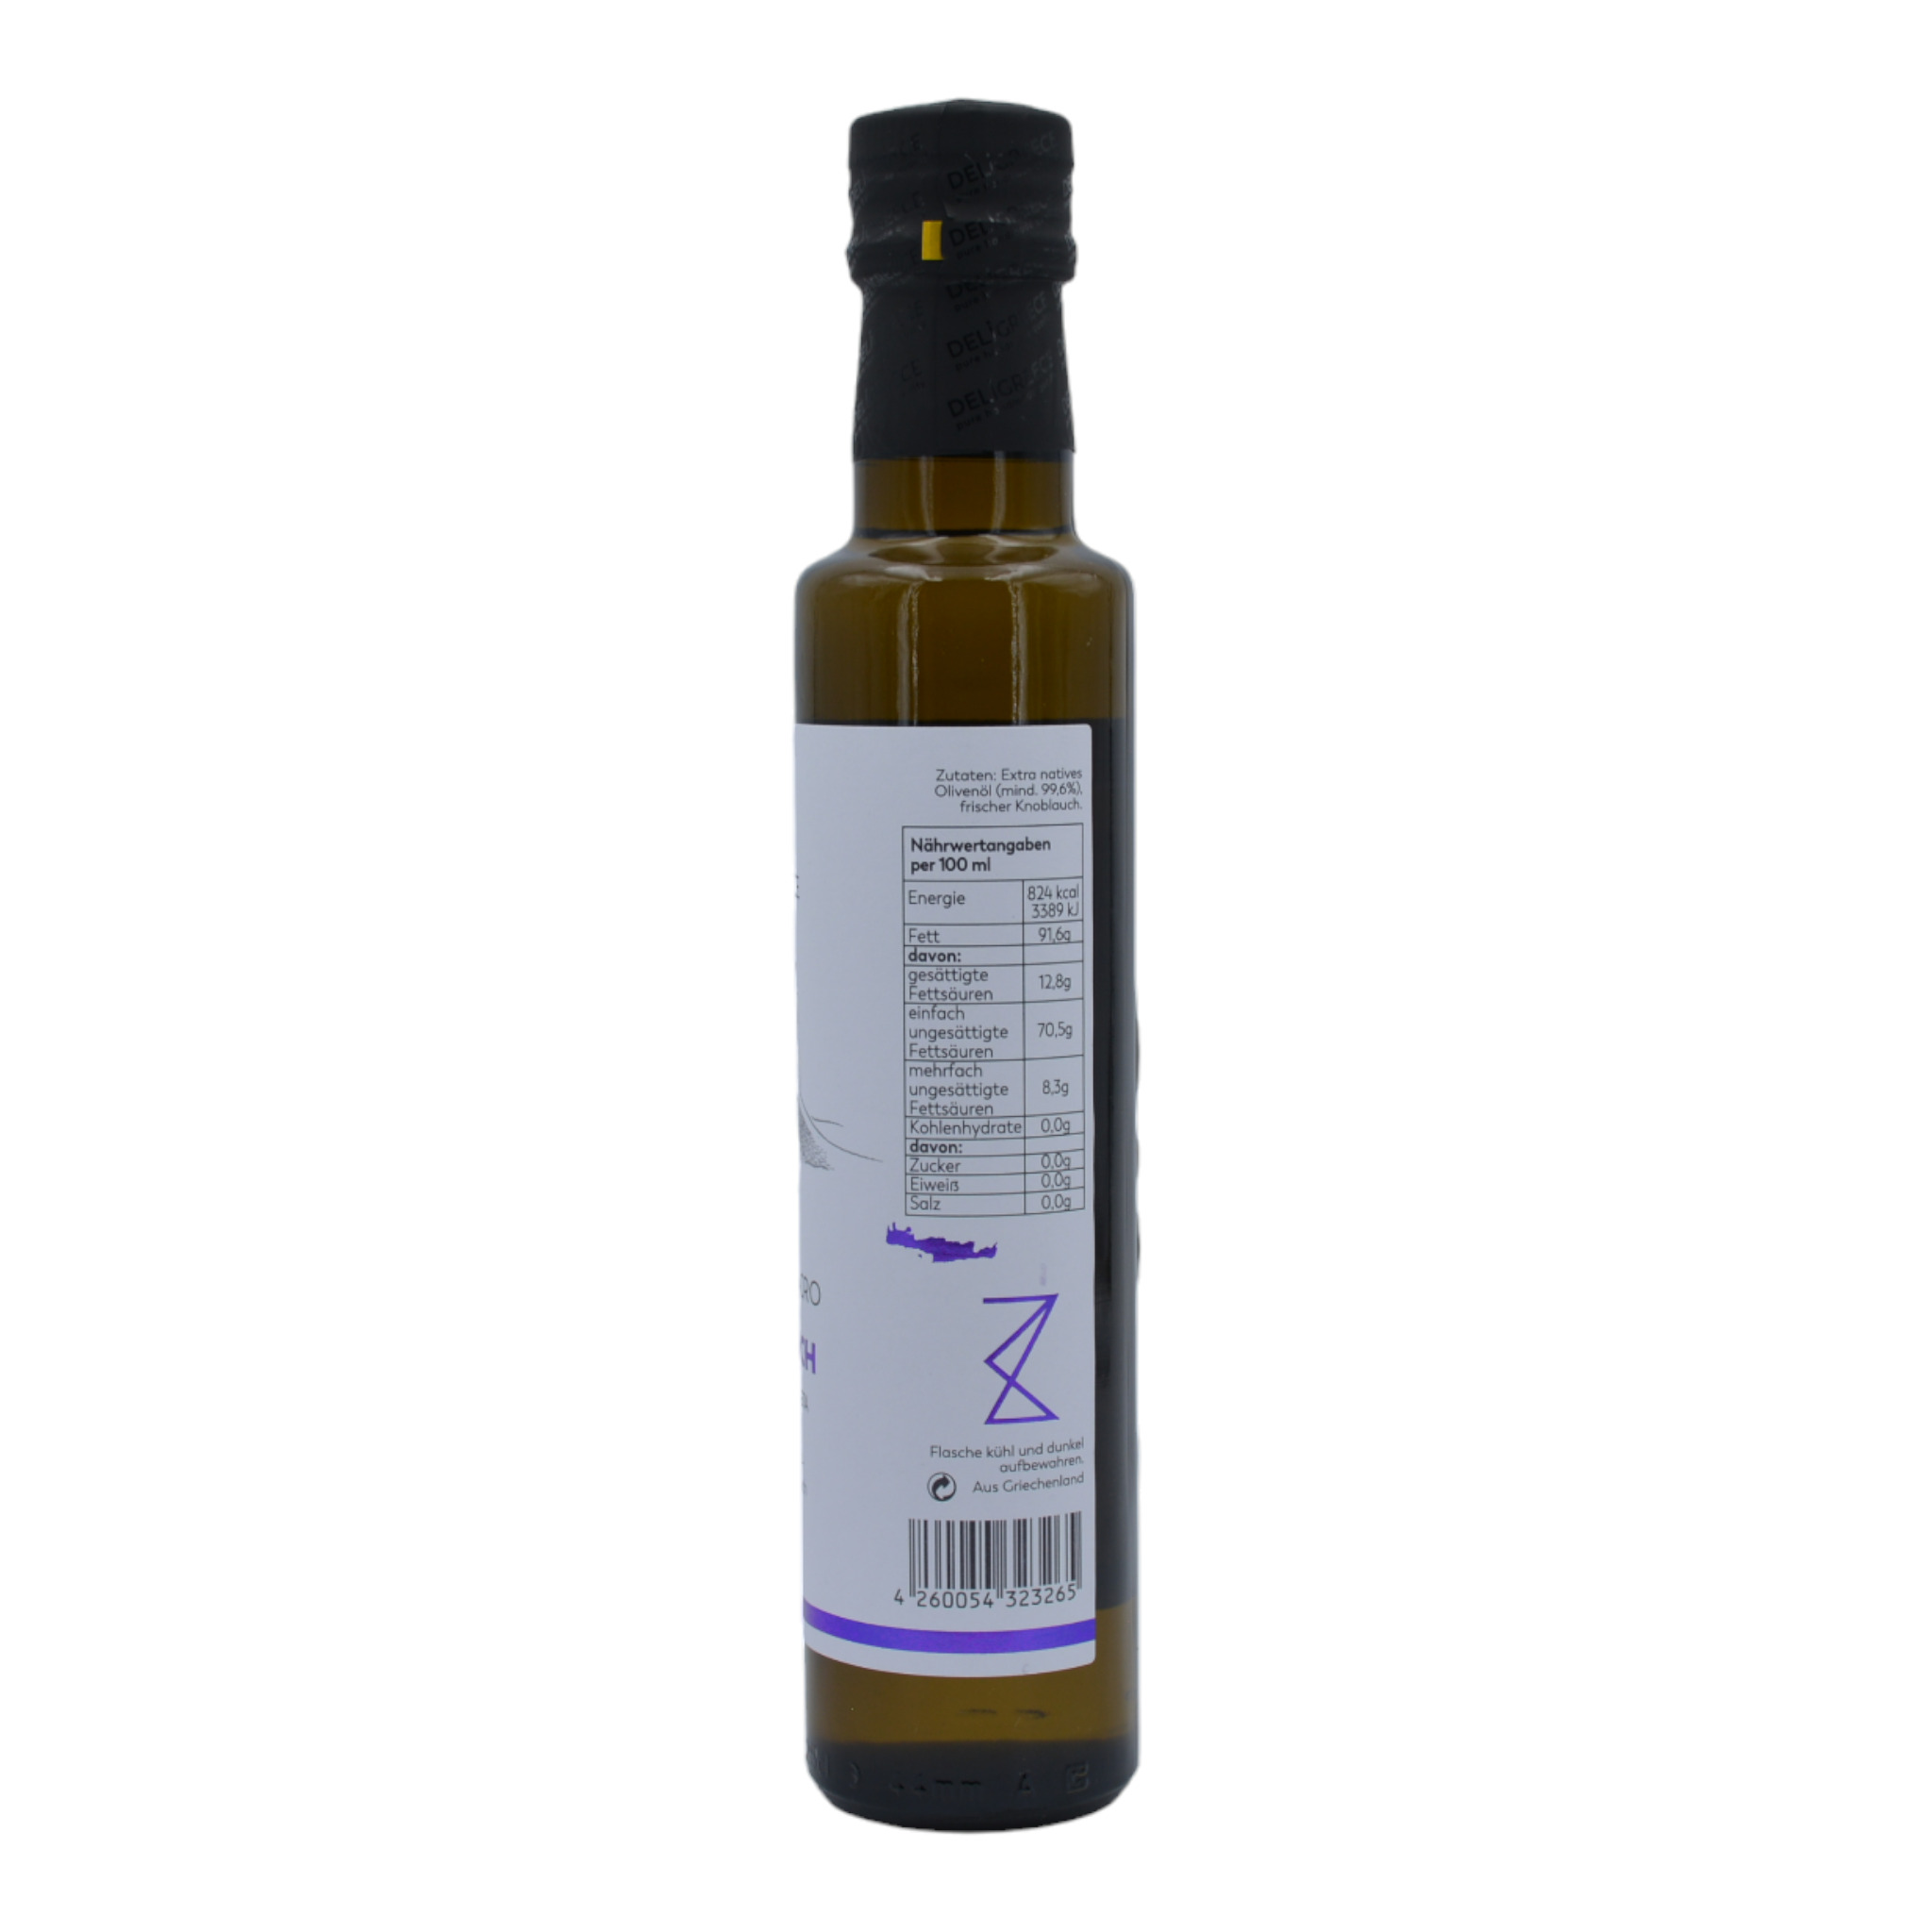 4260054323265Deligreece Castello Zacro Knoblauch Oliveöl aus Kreta s1